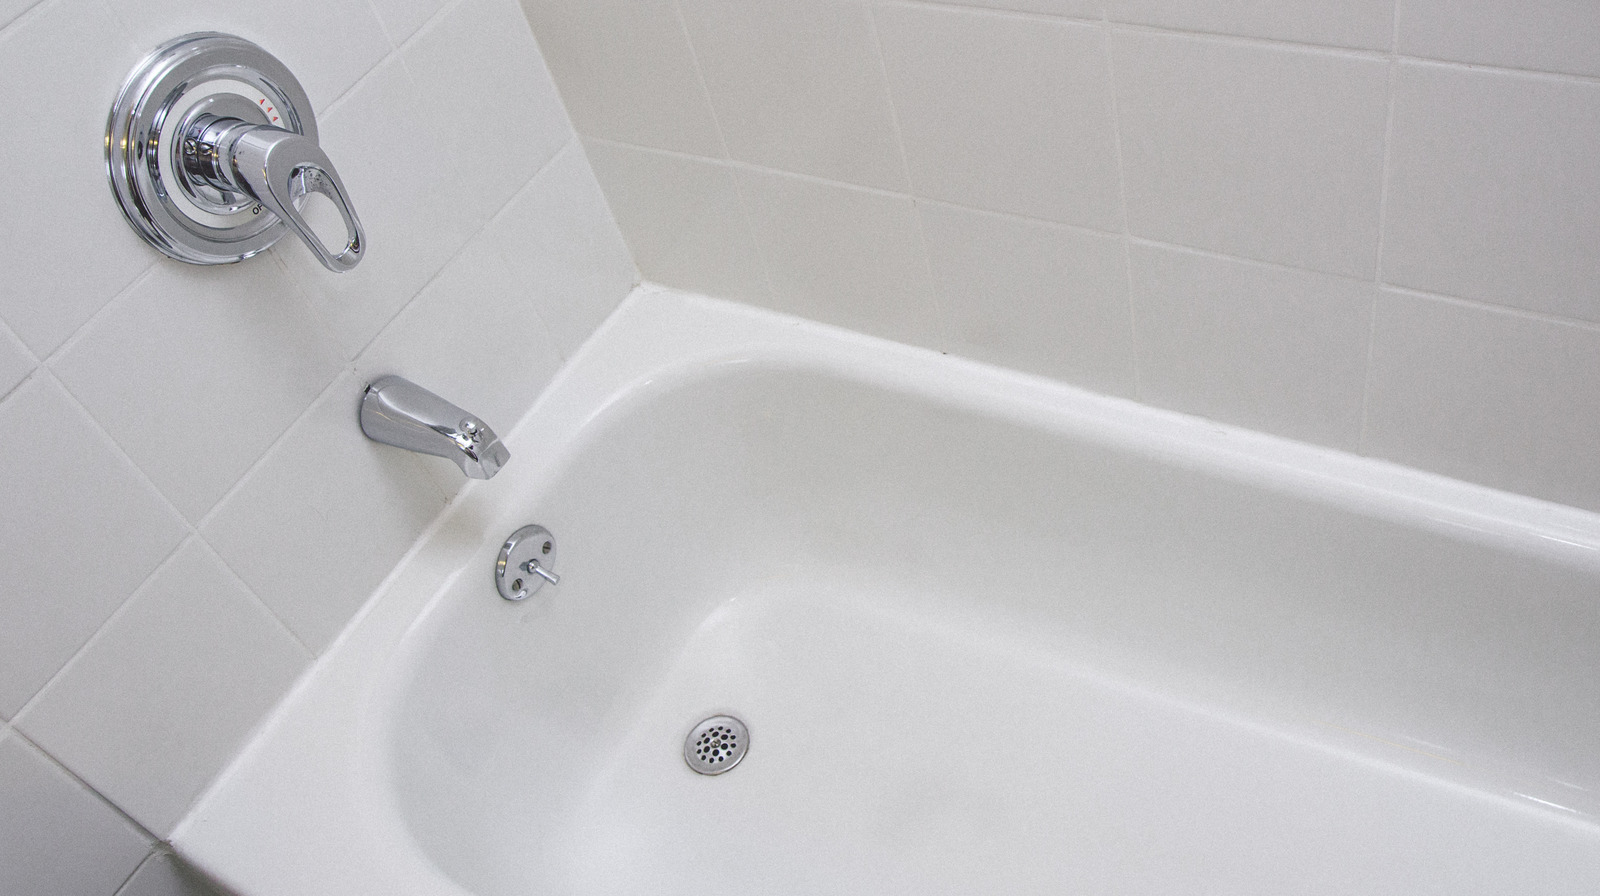 Clean hotel bathtub? Should I be worried about taking a soak?